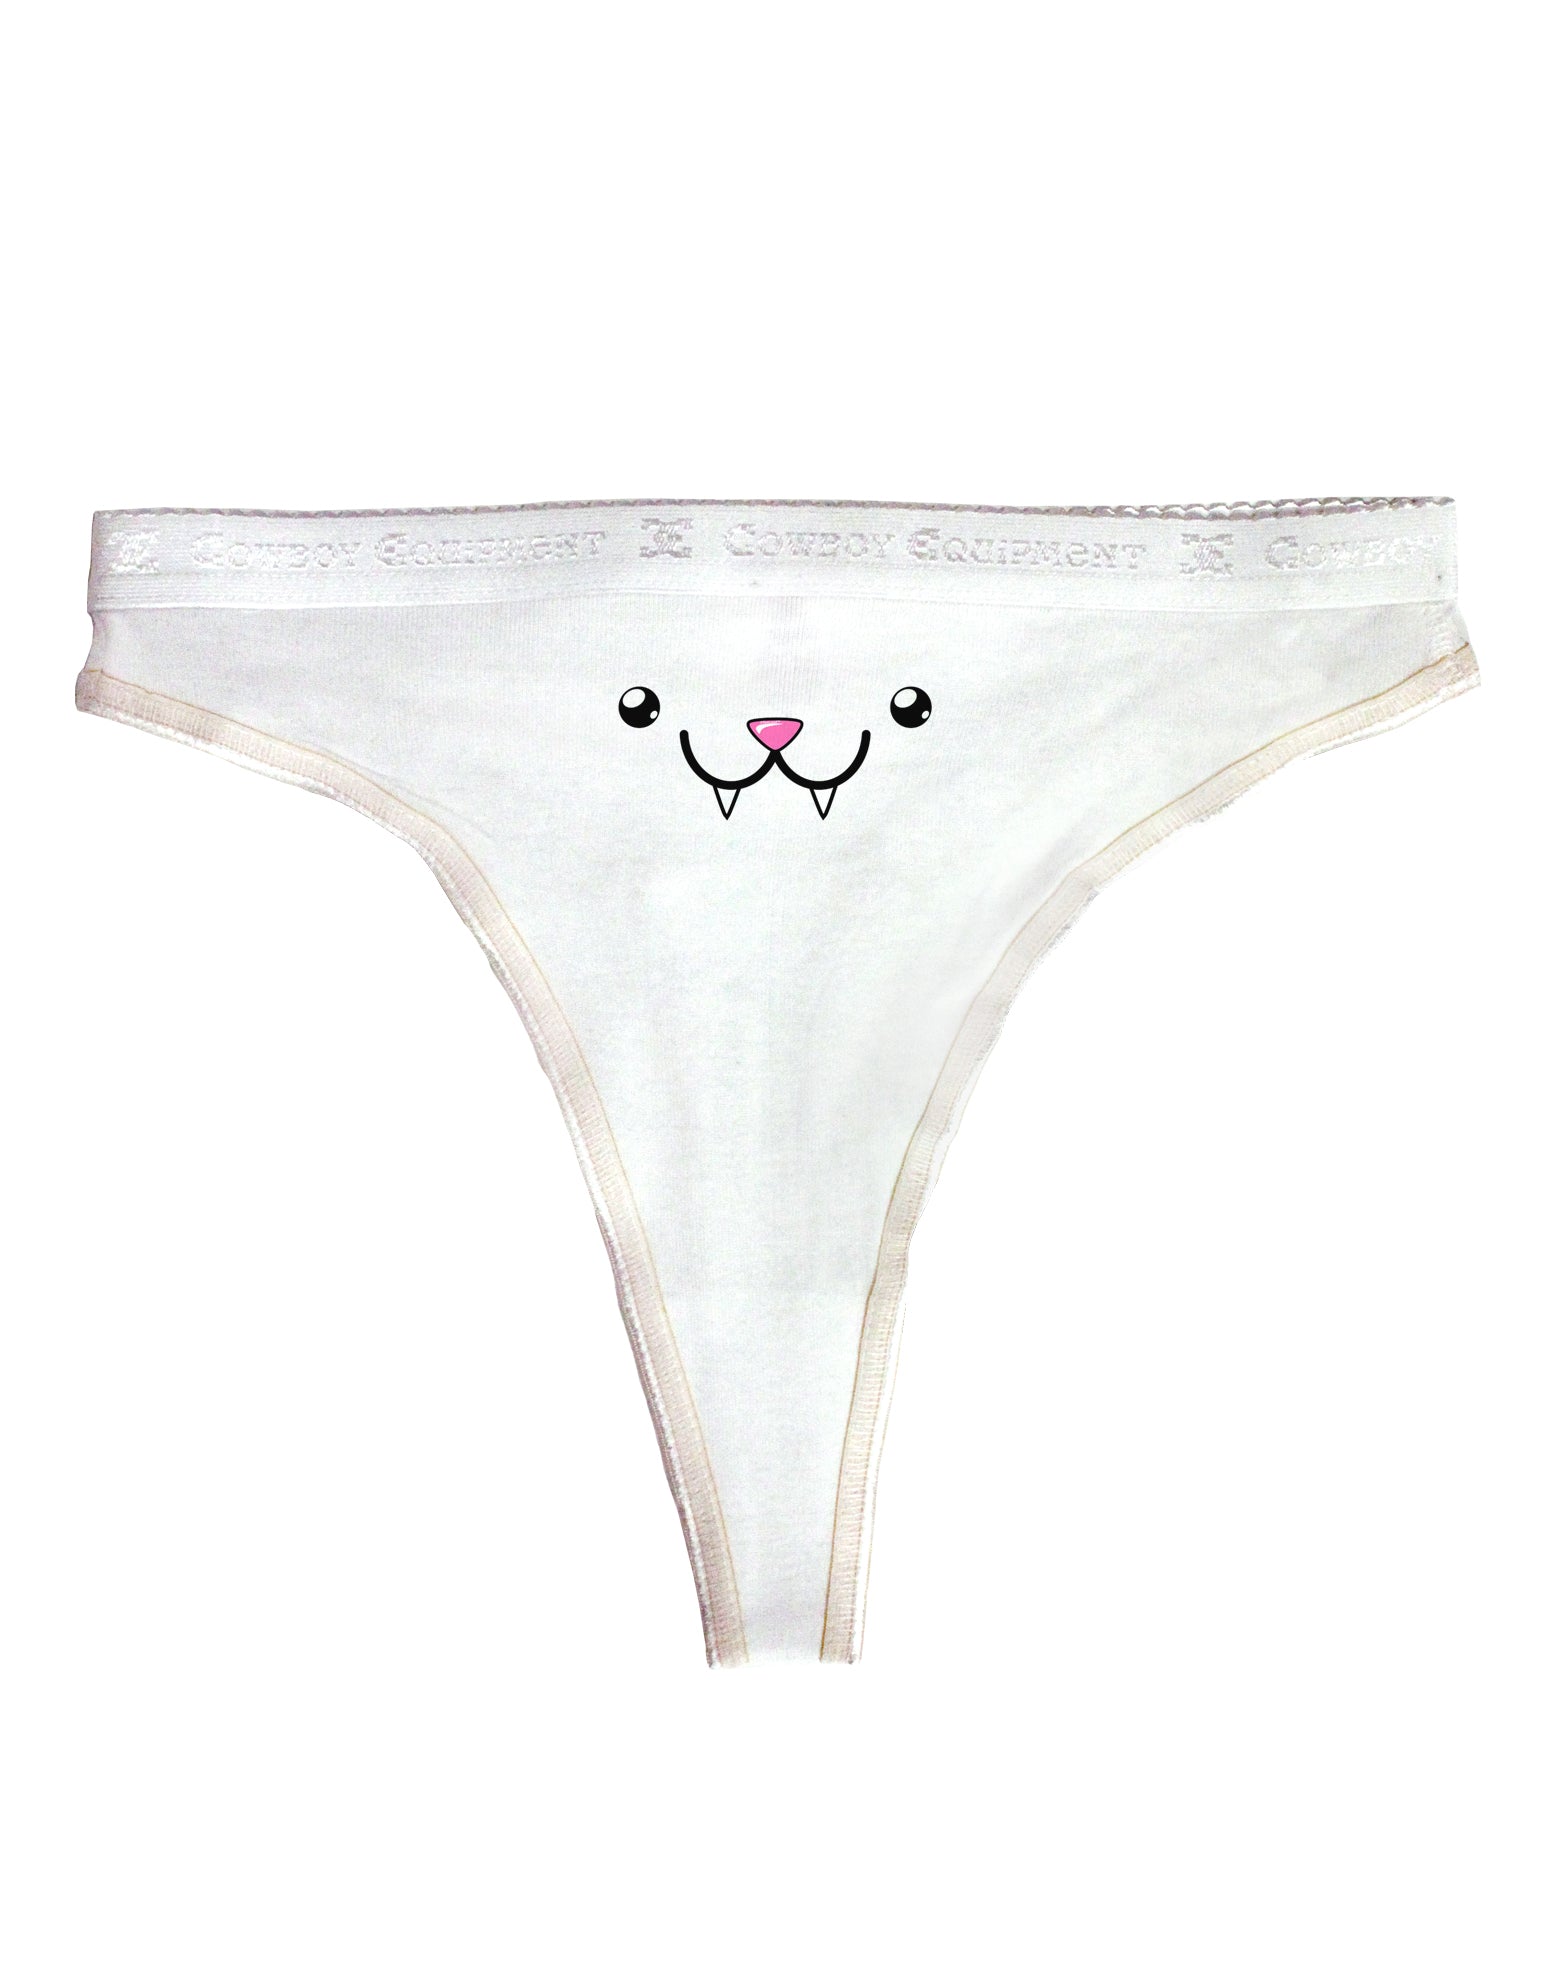 Cheap Sexy Women's G-strings Cute Cat Print Thong Panties Cotton